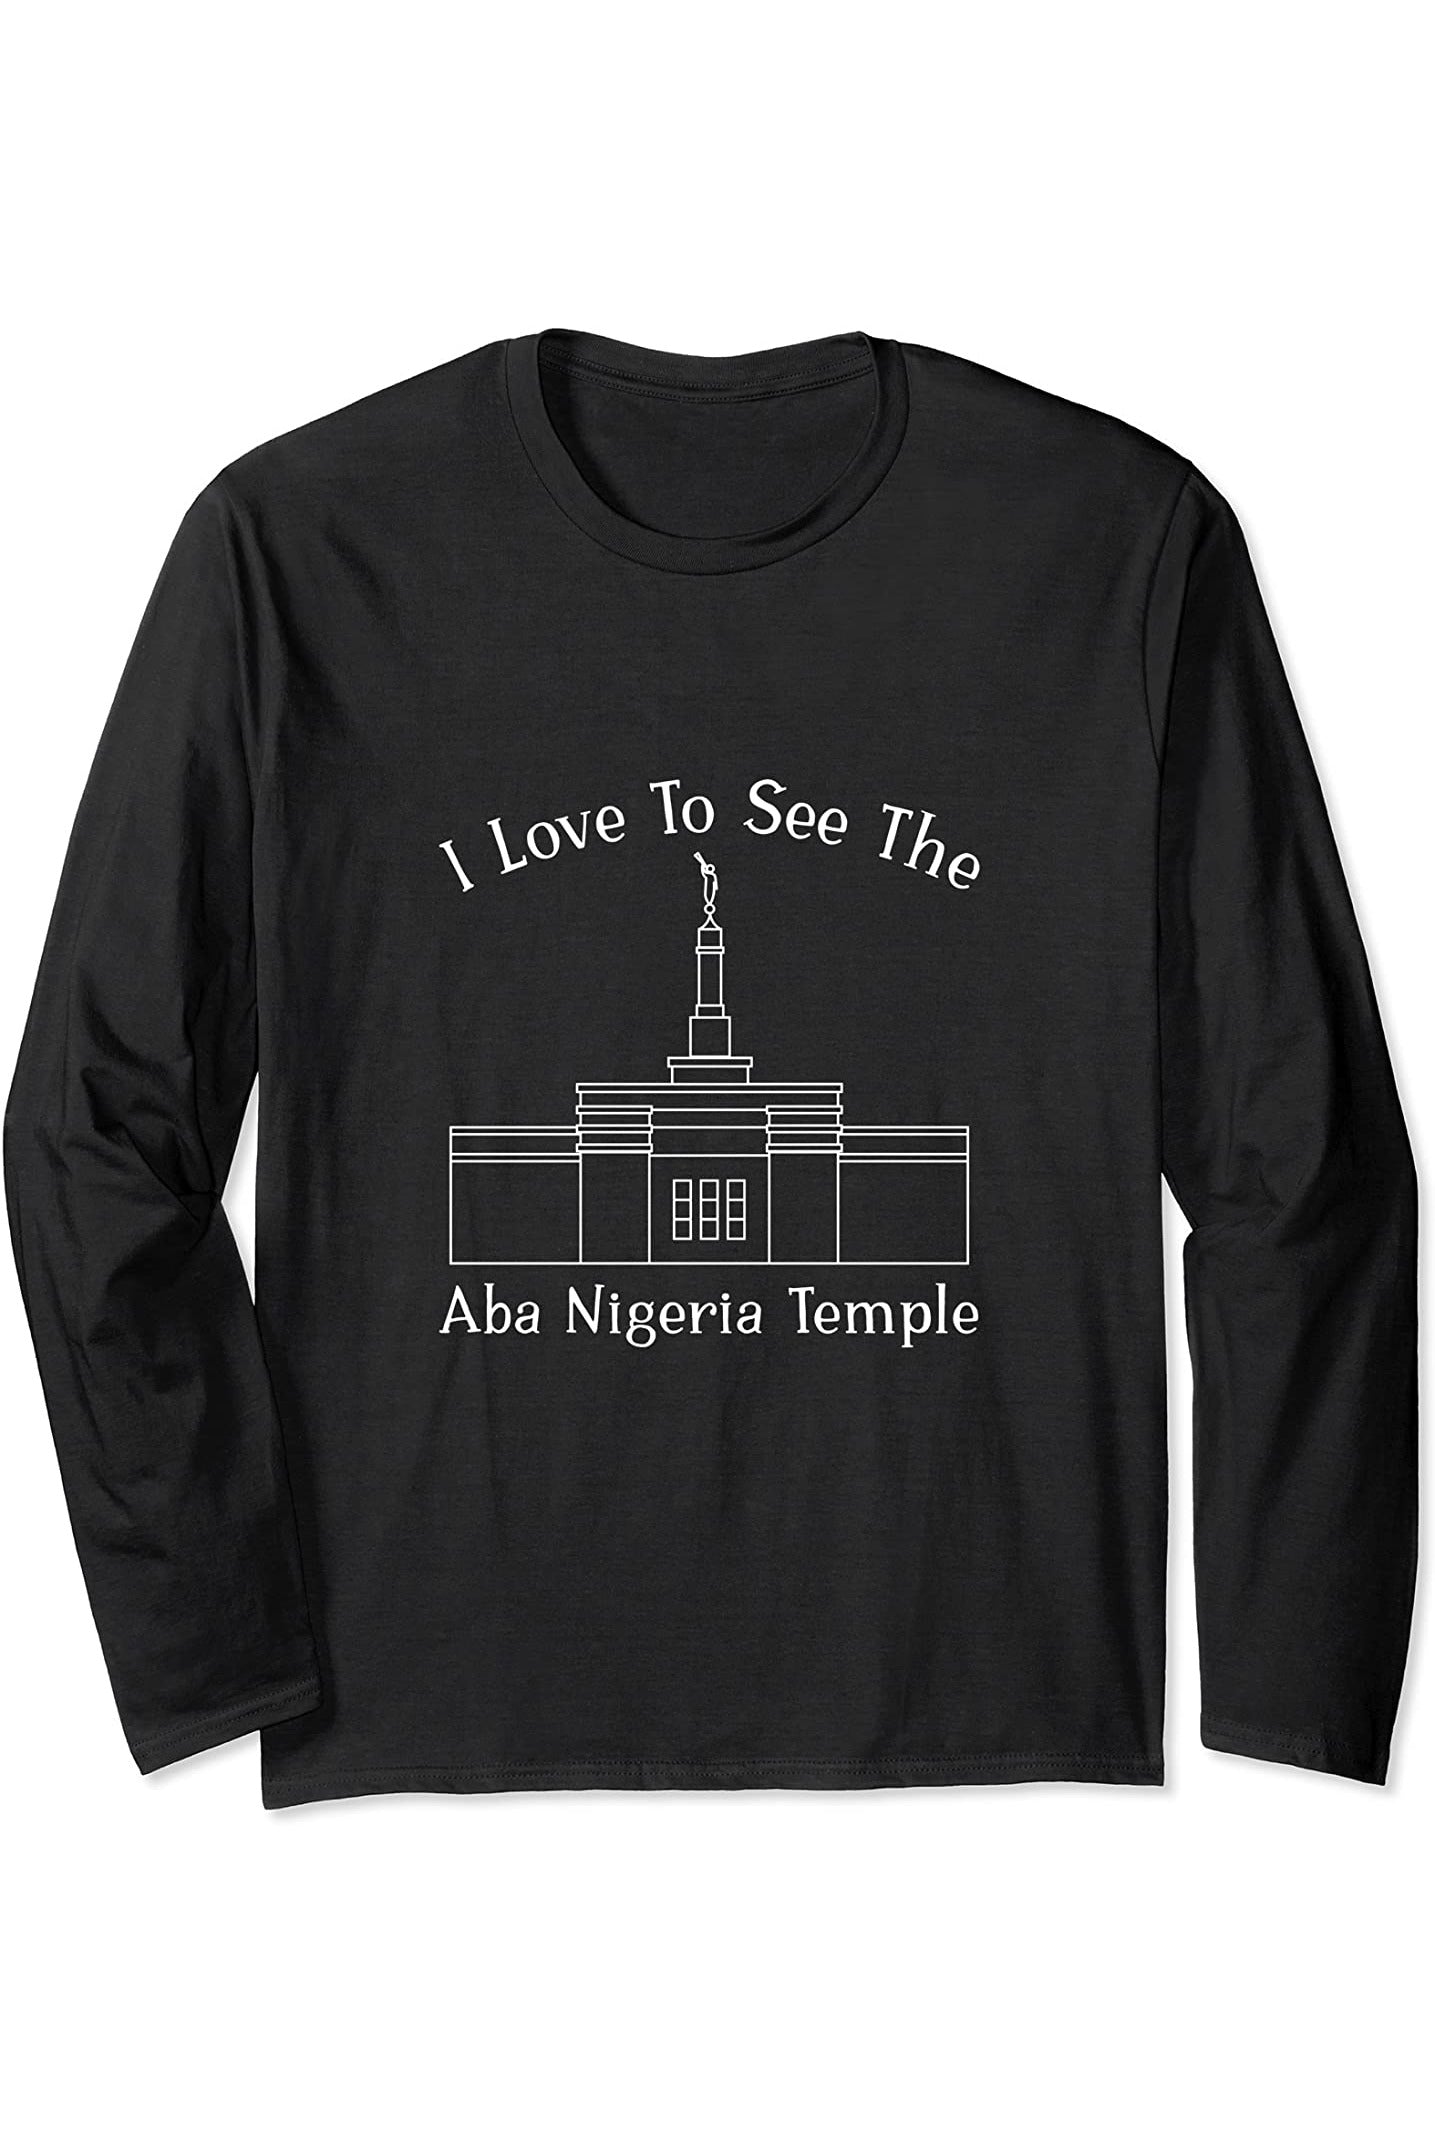 Aba Nigeria Temple Long Sleeve T-Shirt - Happy Style (English) US